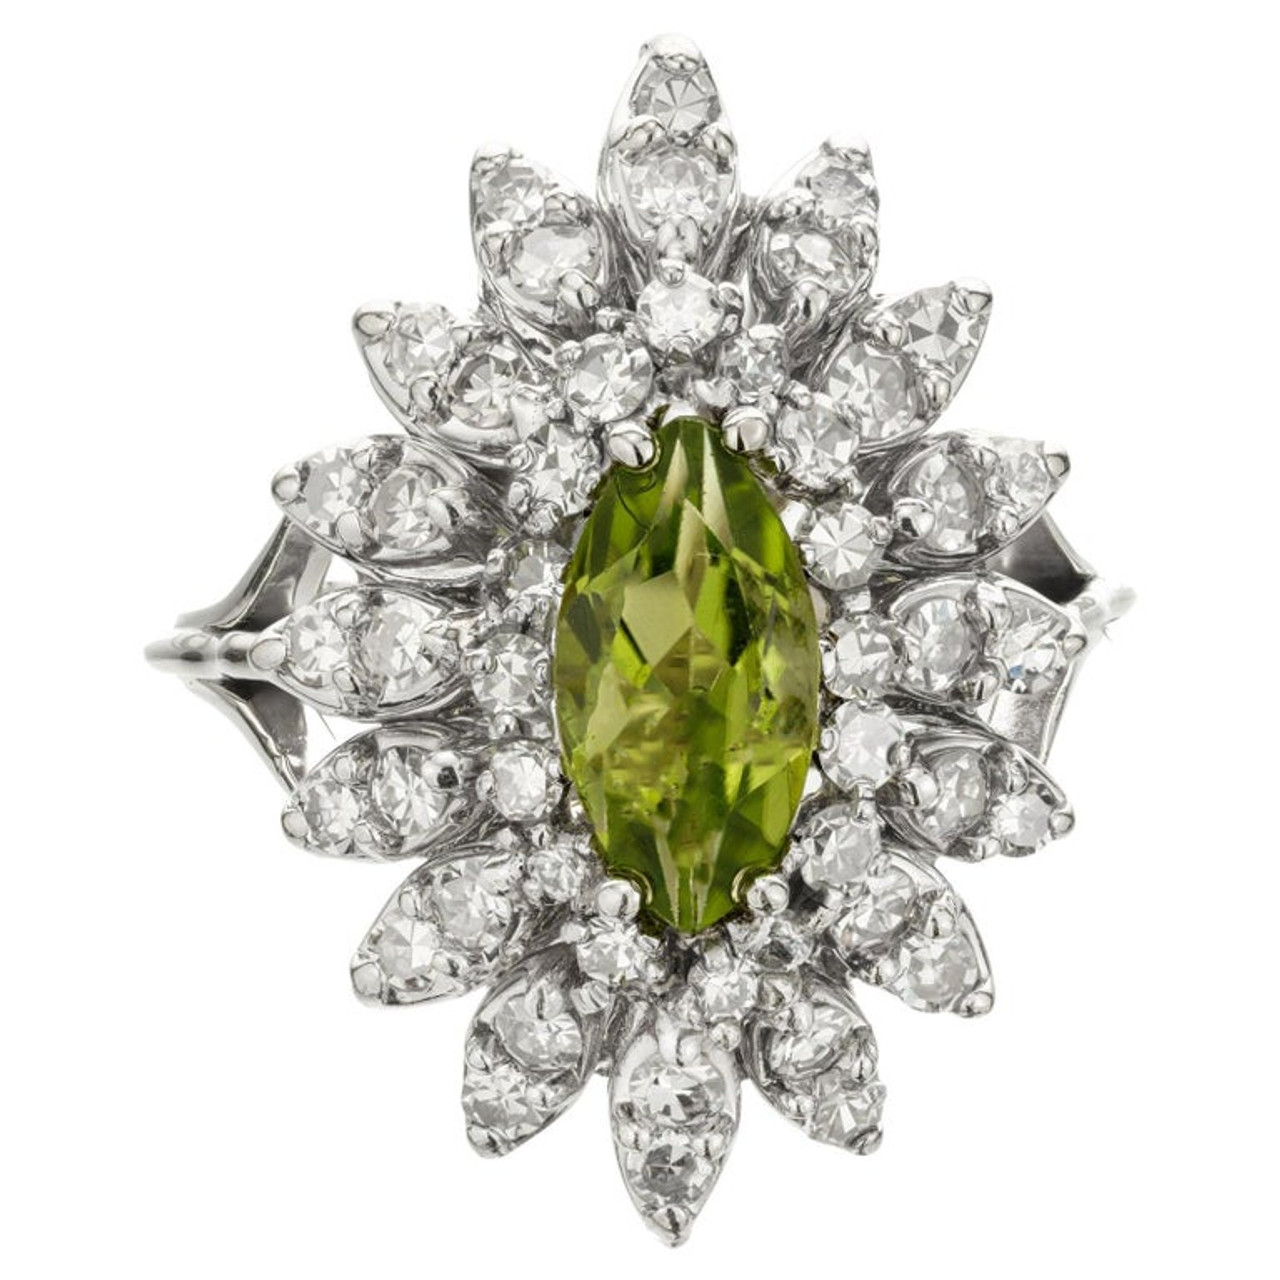 Square Art Deco Diamond Cocktail Ring